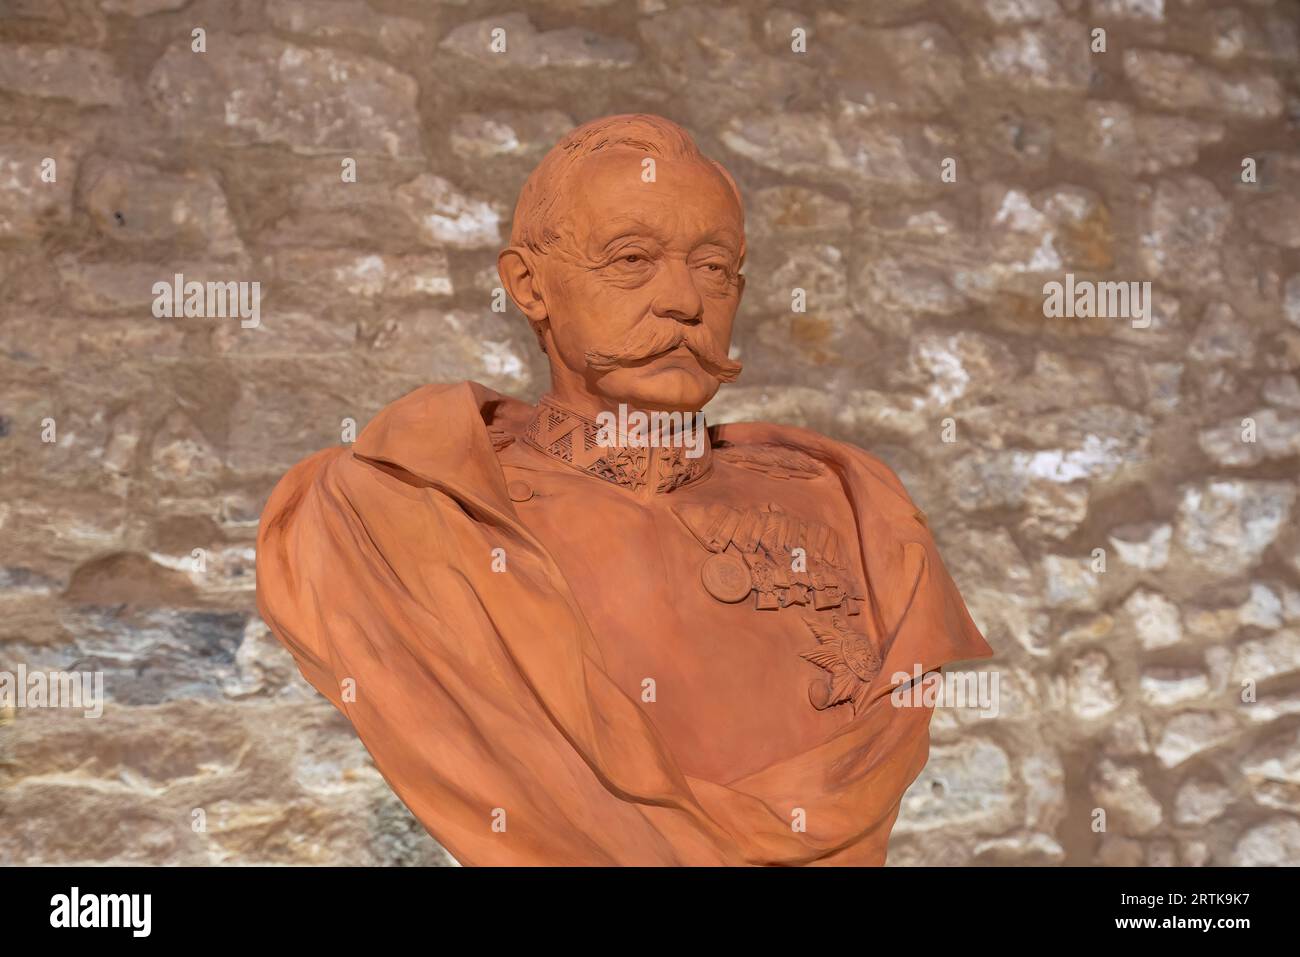 Il Granduca Adolphe Bust al Museo storico della città di Lussemburgo - Lussemburgo, Lussemburgo Foto Stock